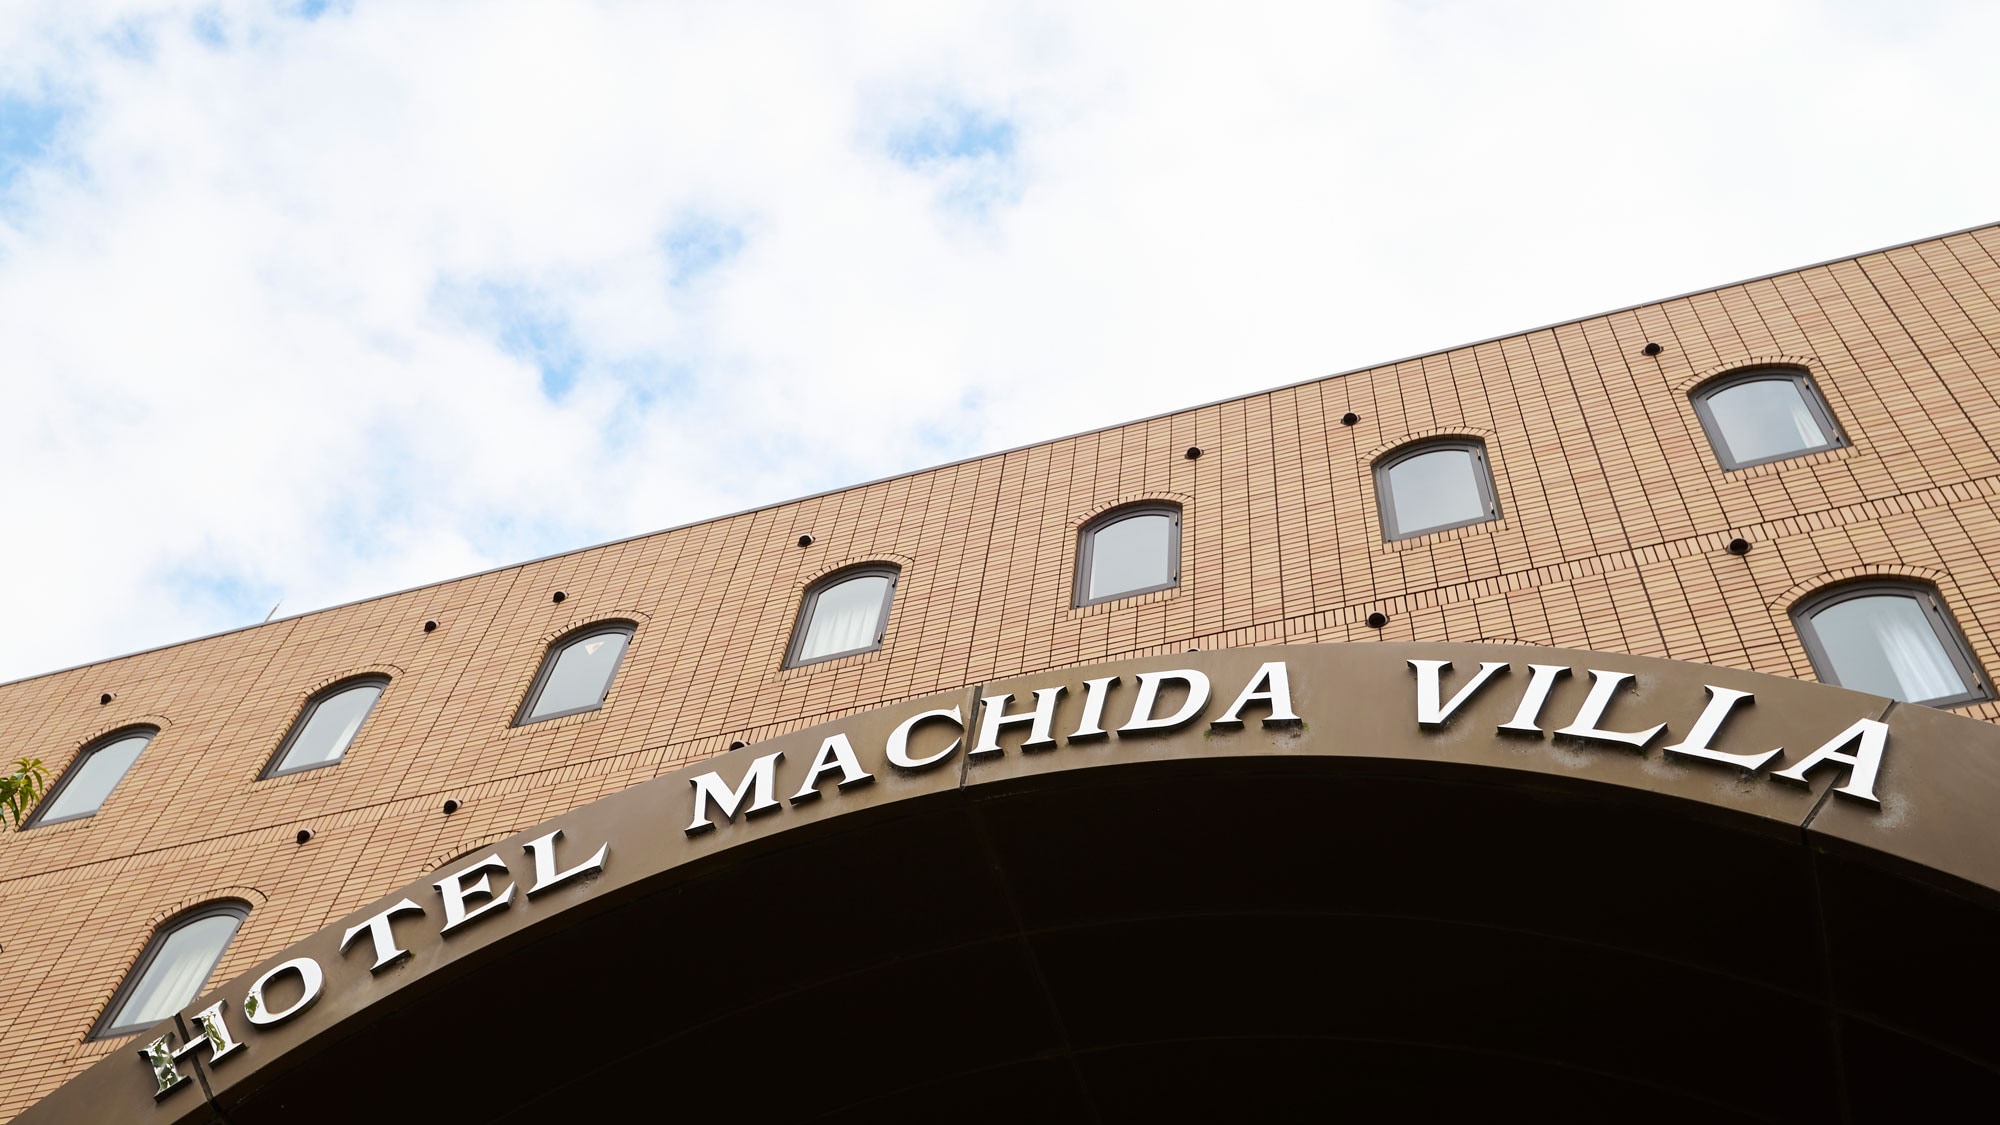 Welcome to Hotel Machida Villa